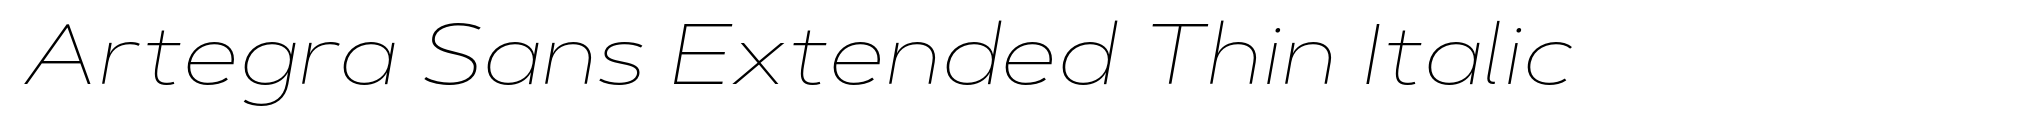 Artegra Sans Extended Thin Italic image